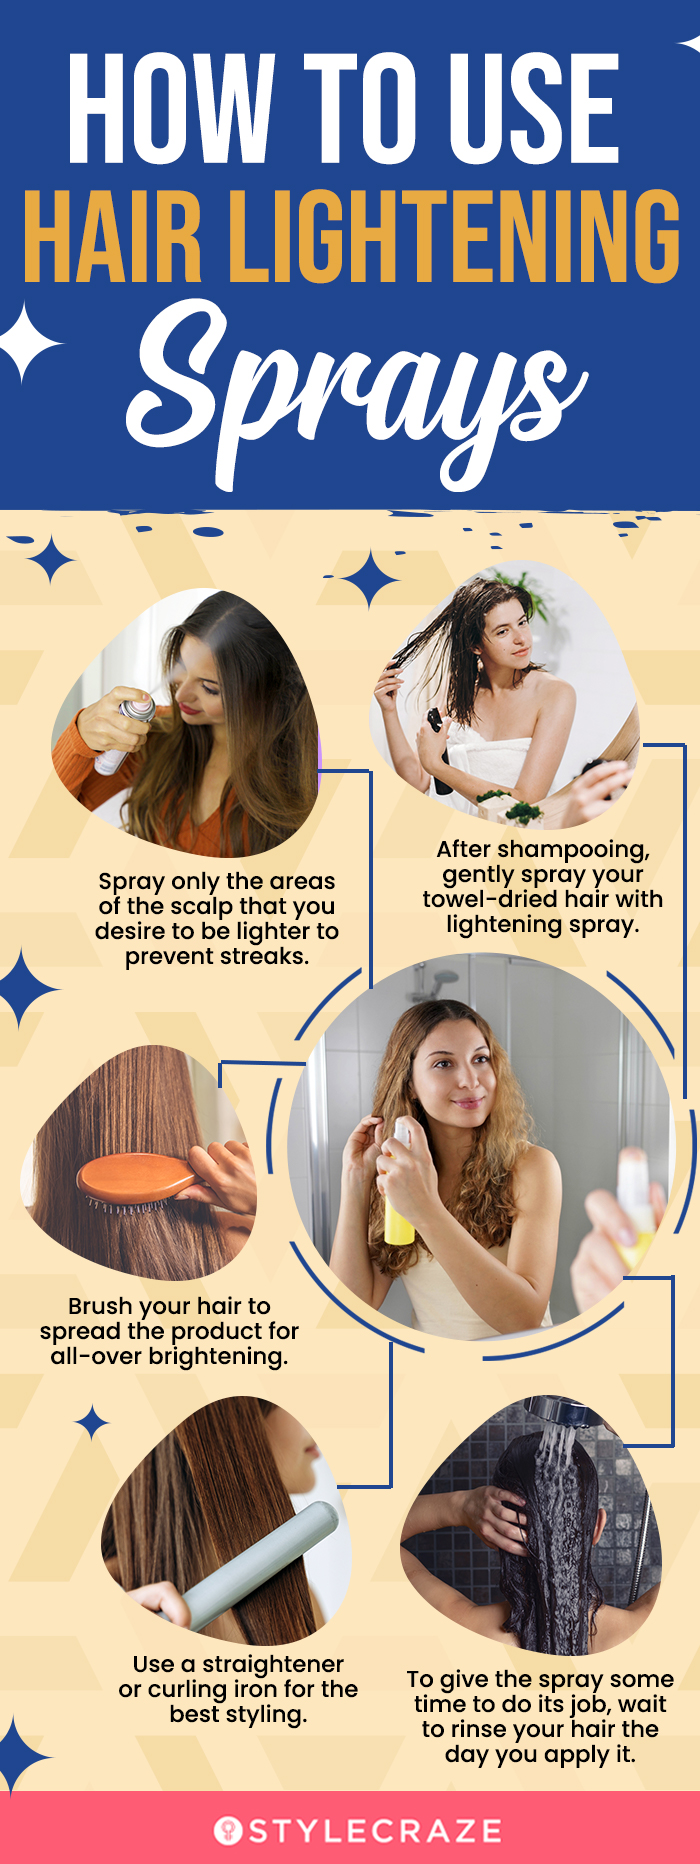 How To Use Hair Lightening Sprays